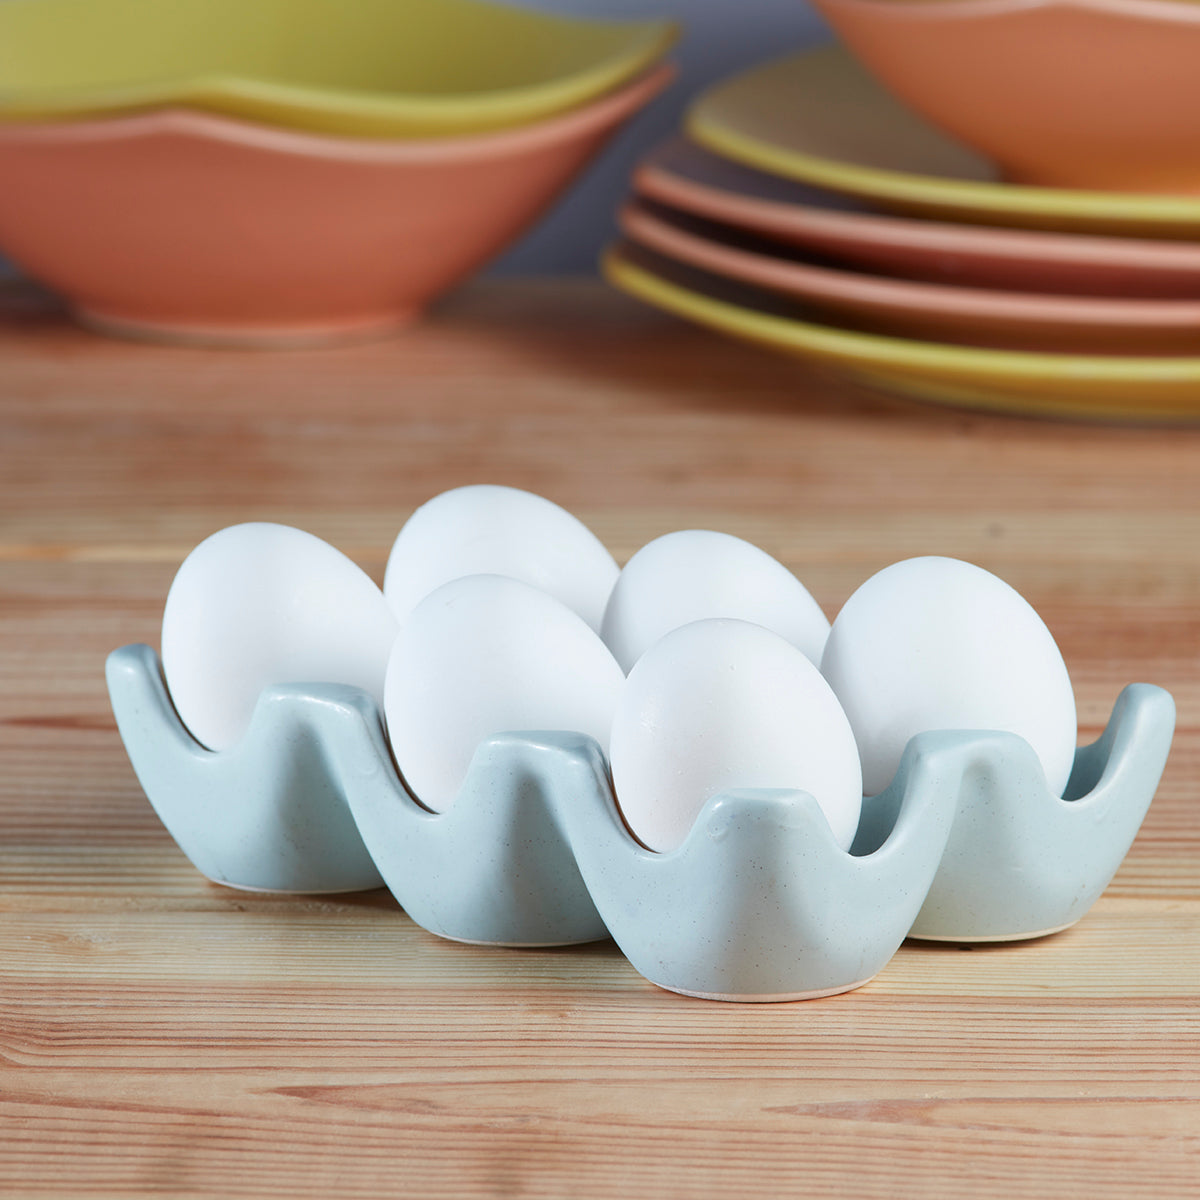 Ceramic 6 Egg Tray / Crate for countertop Refrigerator, Light Blue